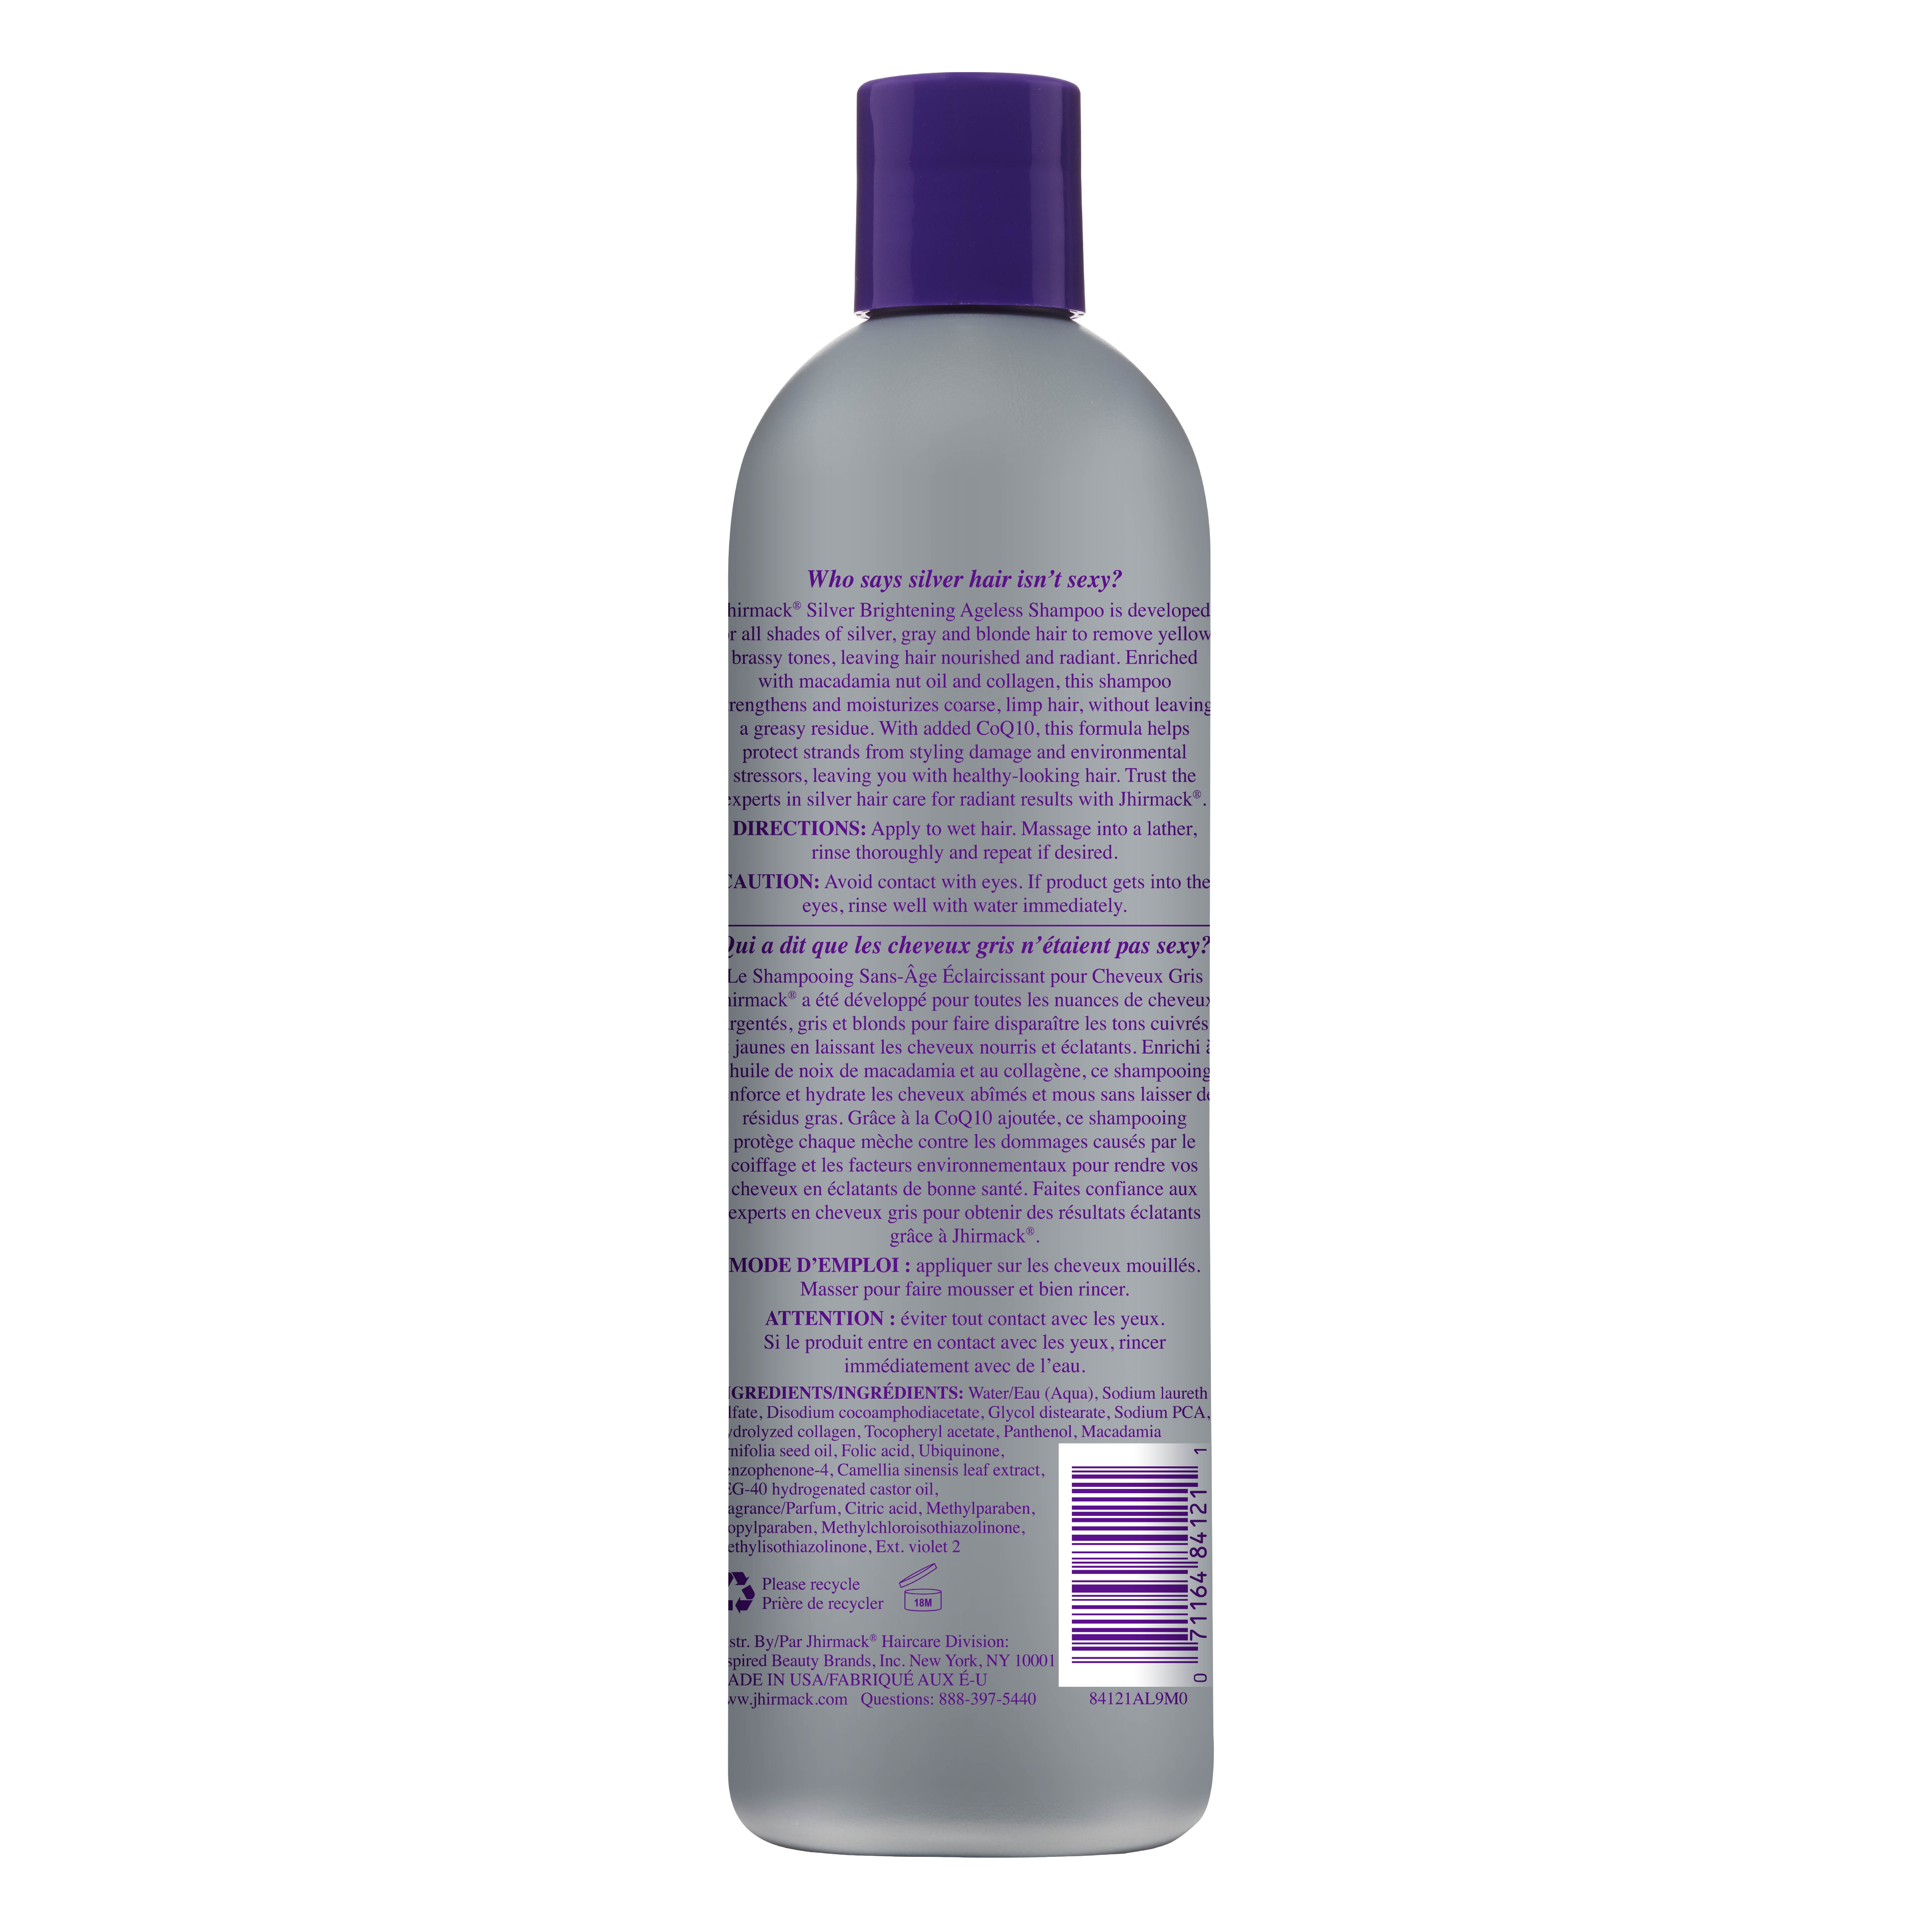 Jhirmack Brightening Purple Shampoo with Collagen, Tones Silver & Blonde Hair Shades, 12 fl oz - image 2 of 11